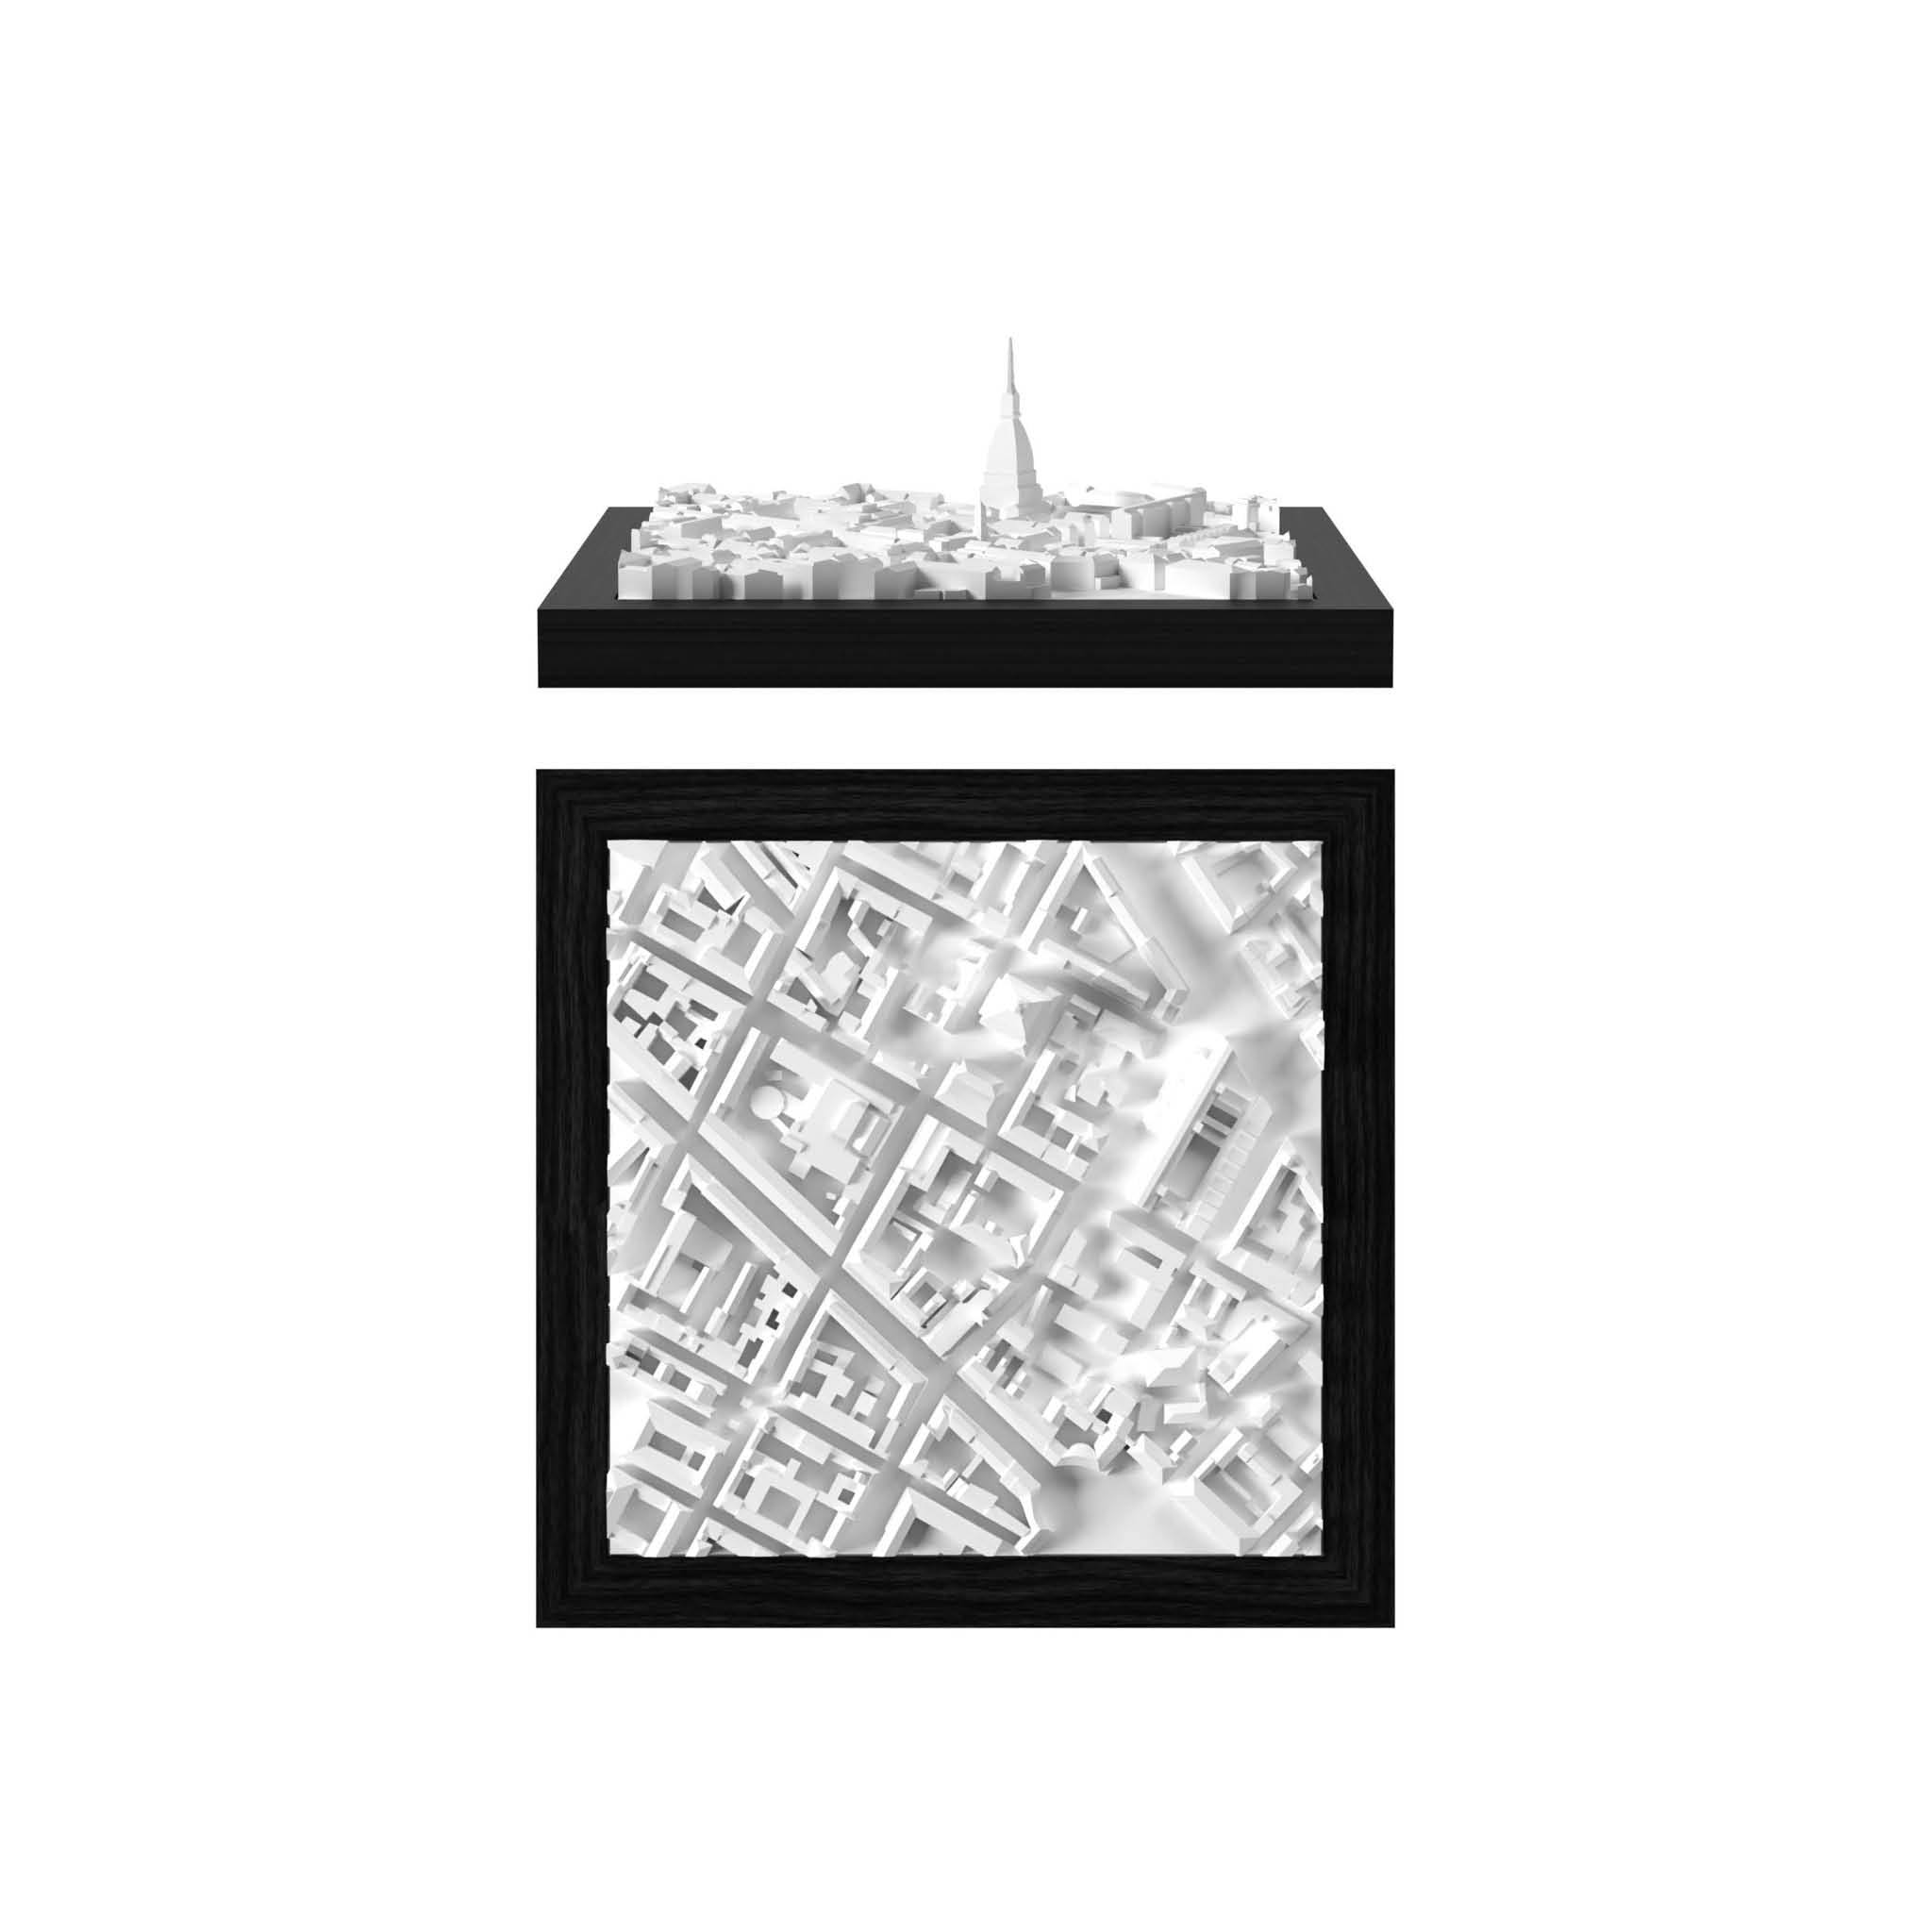 Turin 3D City Model Cube, Europe - CITYFRAMES